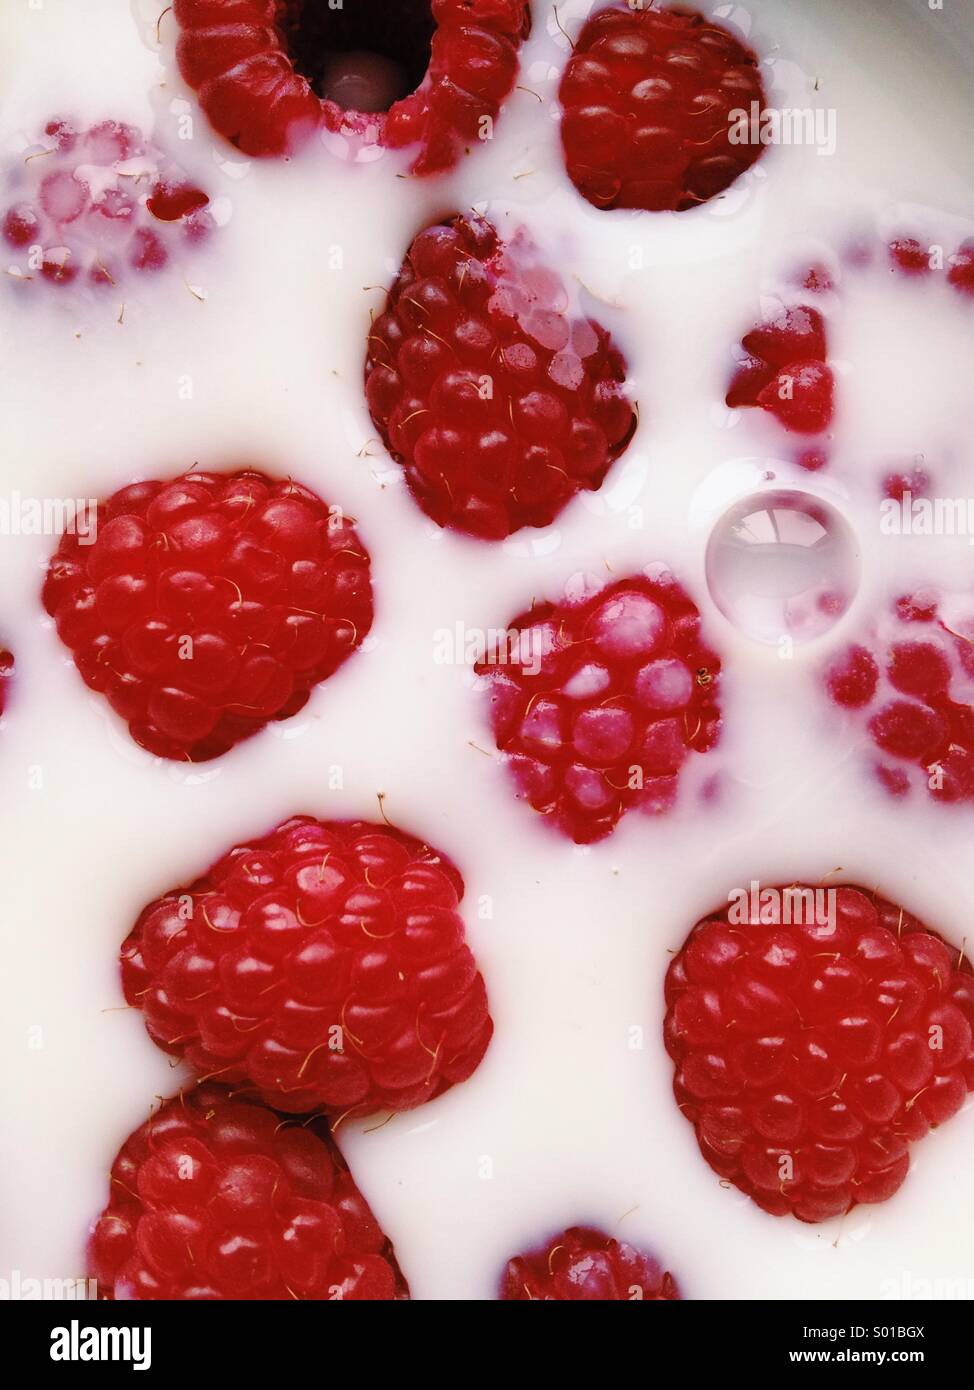 Raspberries in Milk Stock Photo